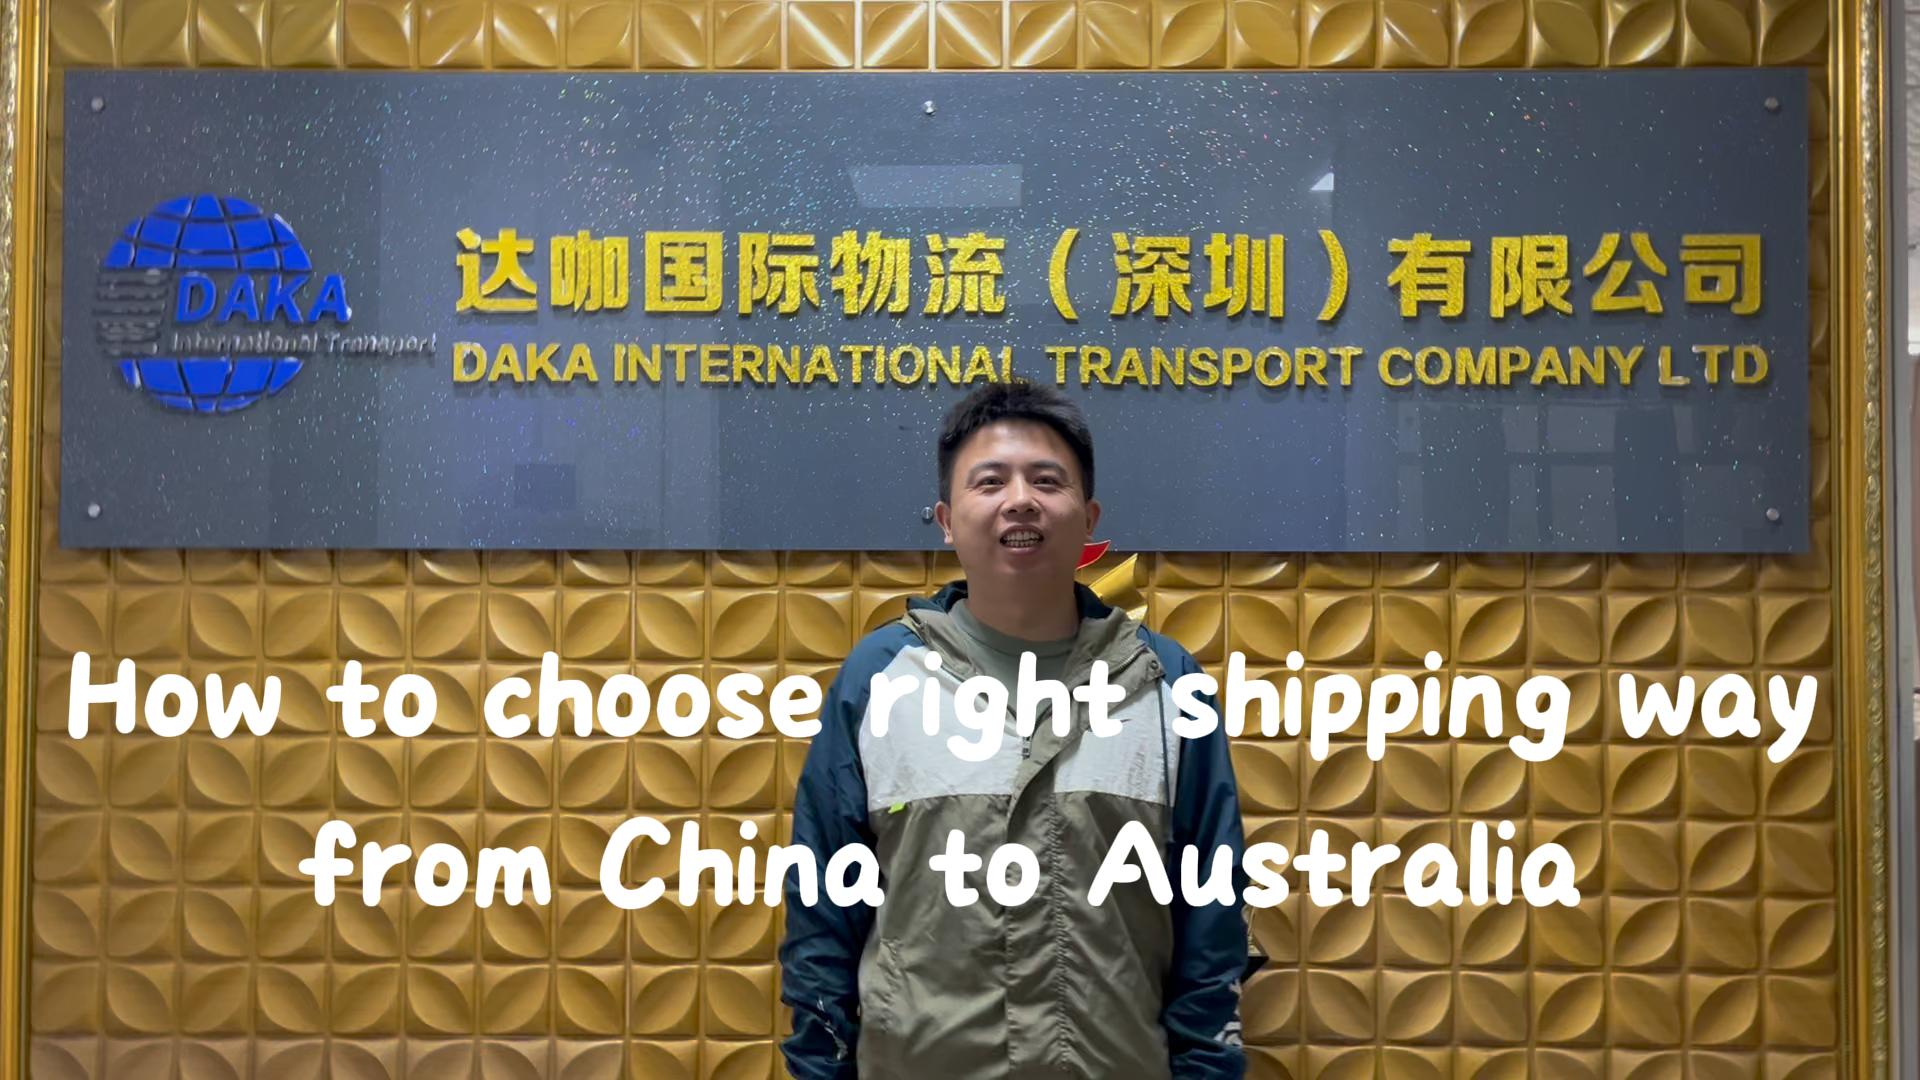 Shipping ways from China to Australia